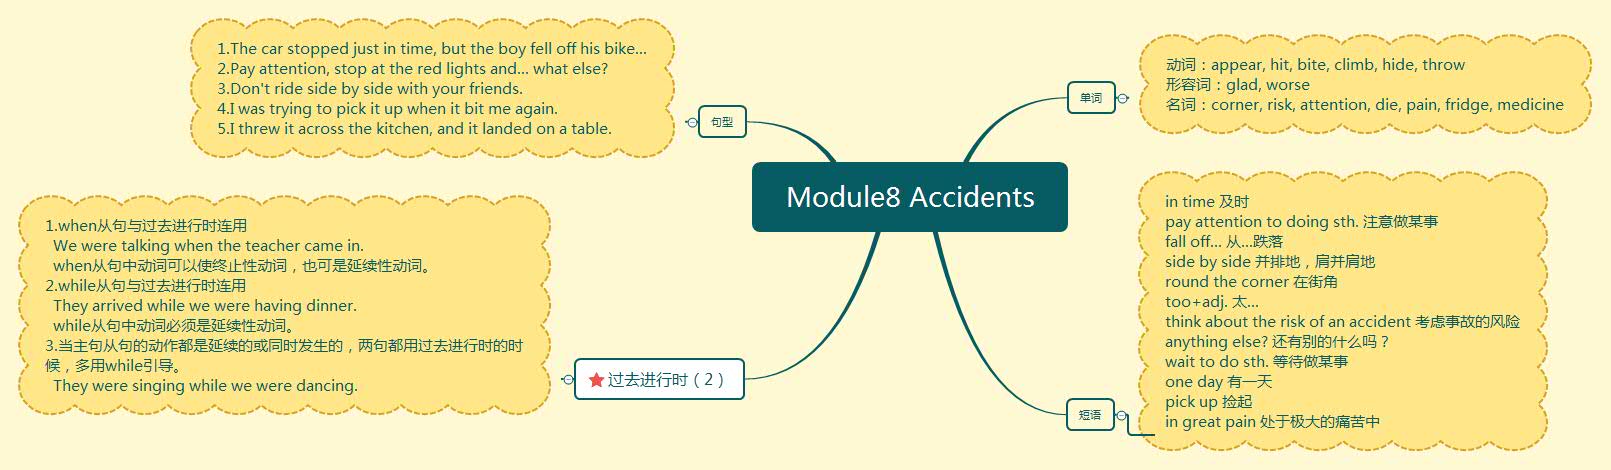 Module8 Accidents.jpg